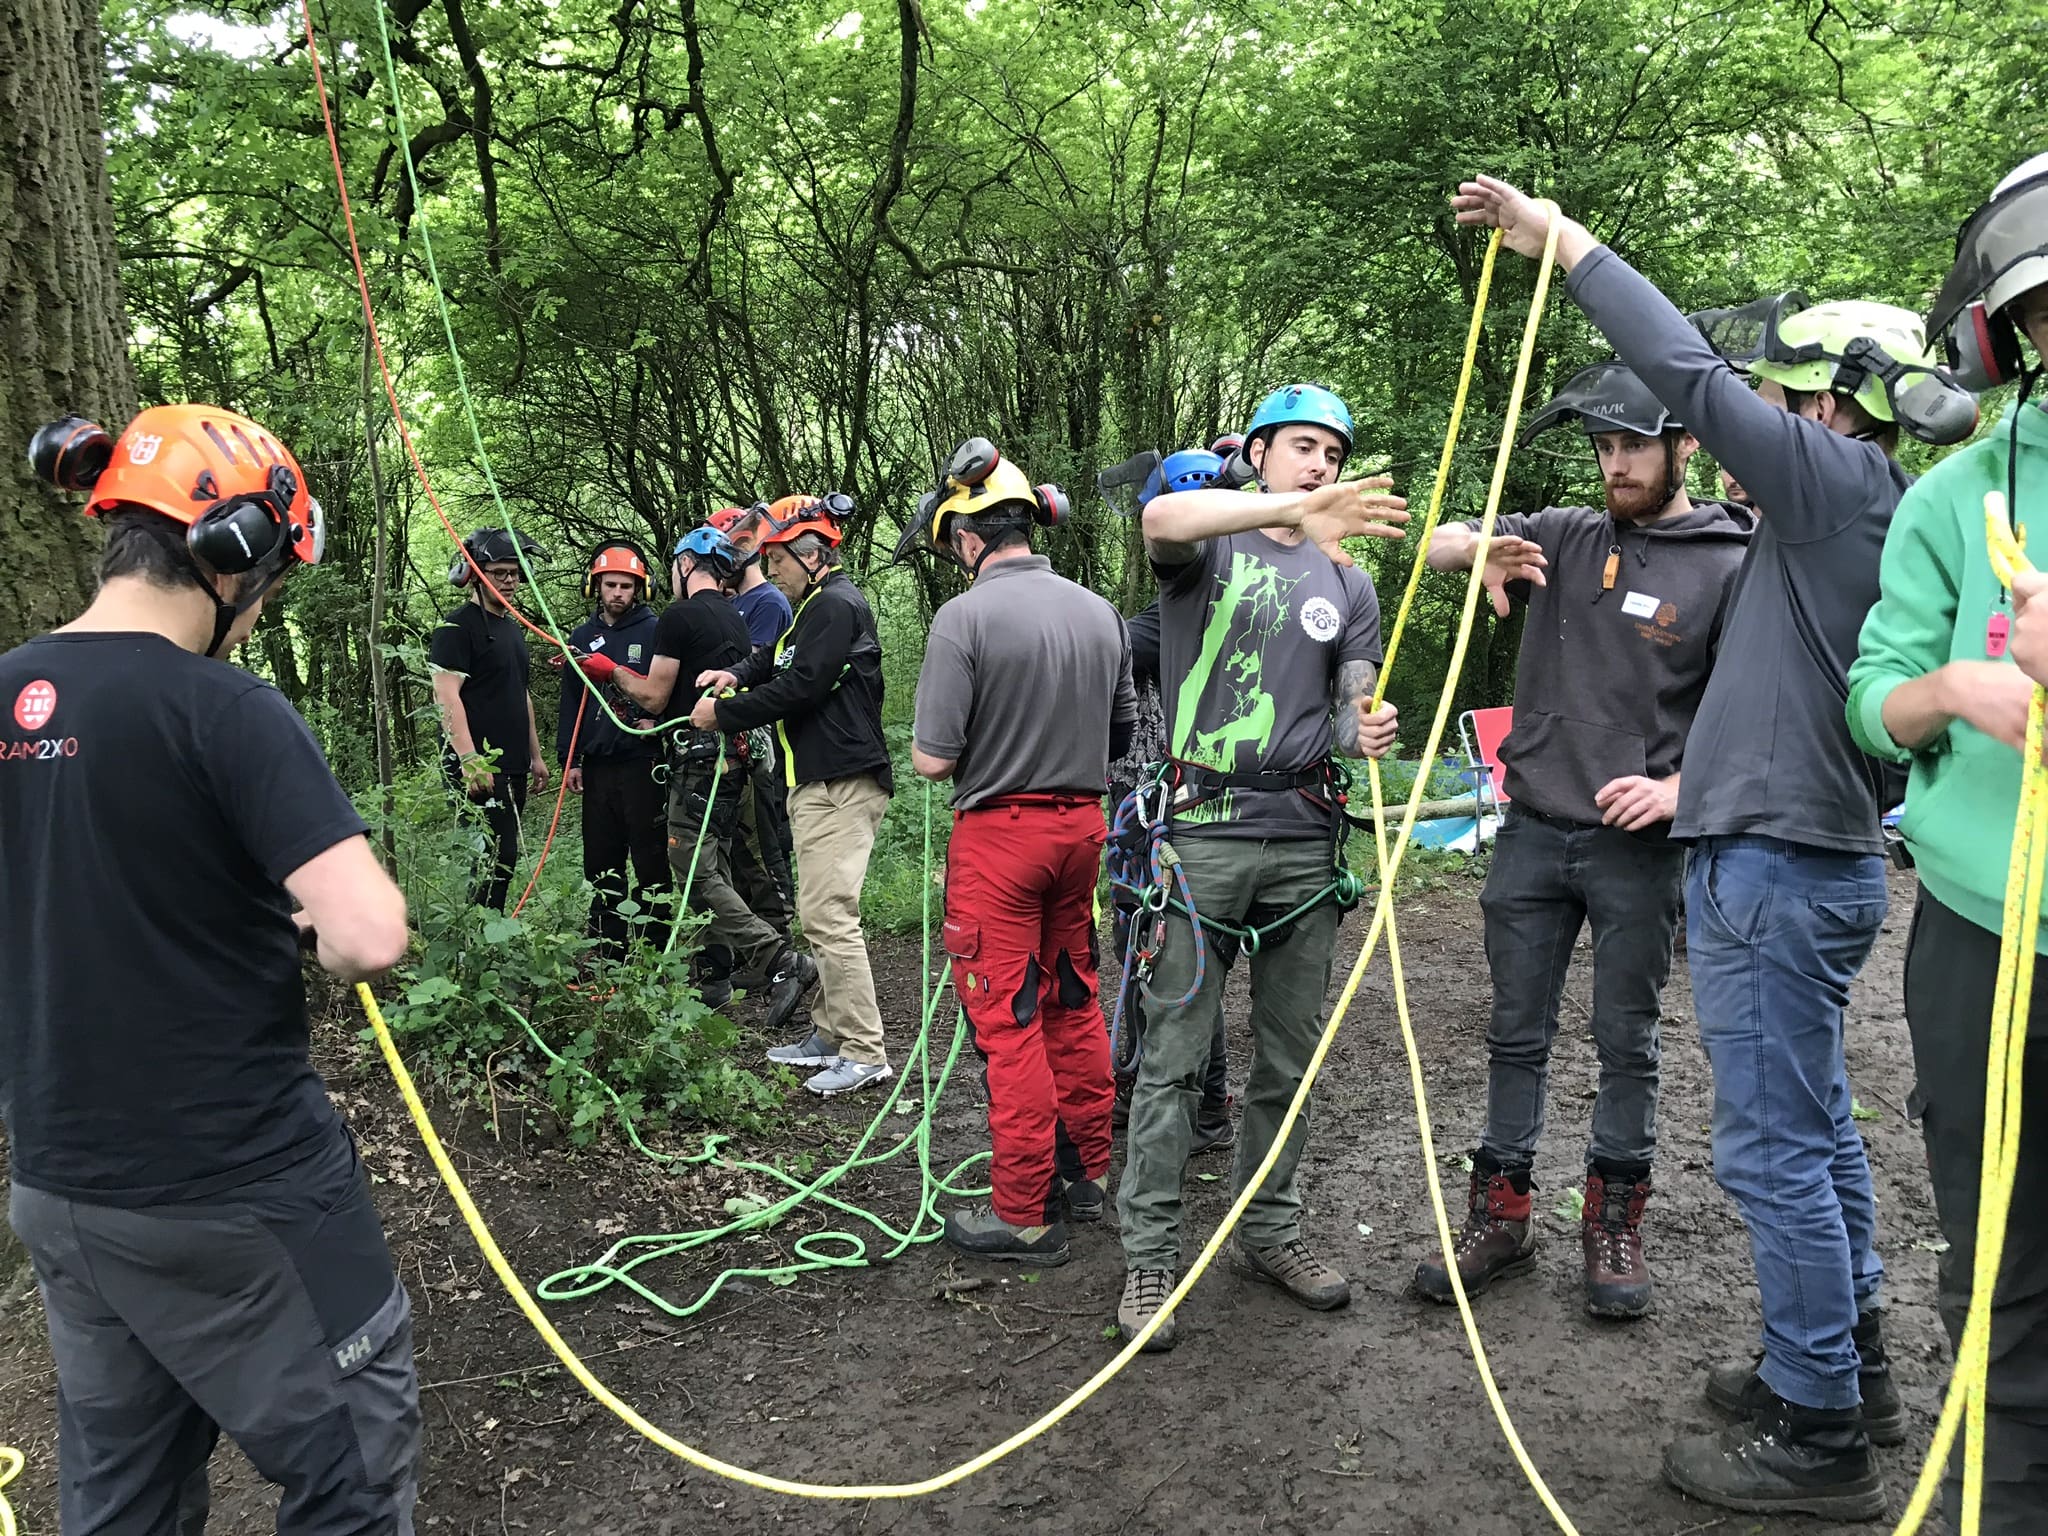 An arborist instructor teaching other arborists SRT techniques